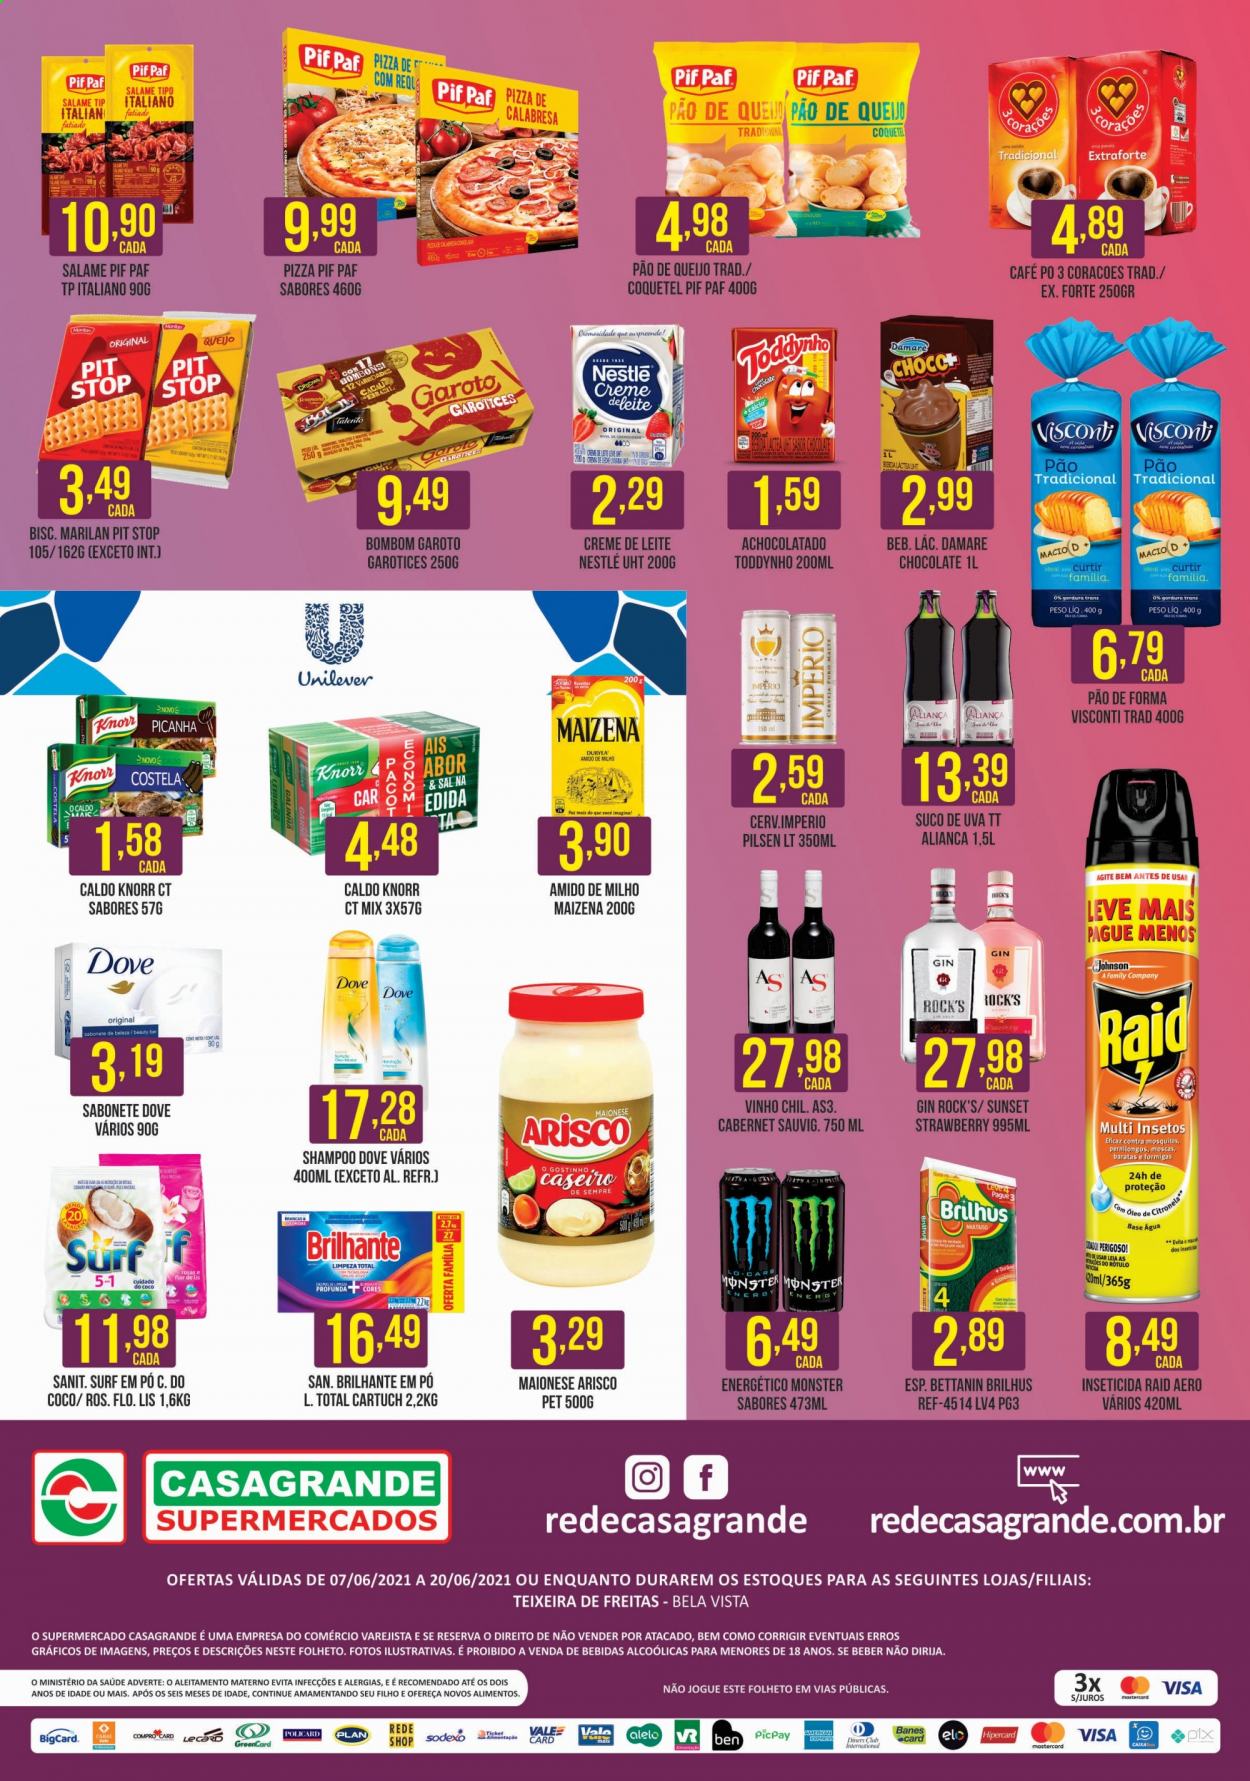 Encarte Casagrande Supermercados  - 07.06.2021 - 20.06.2021.